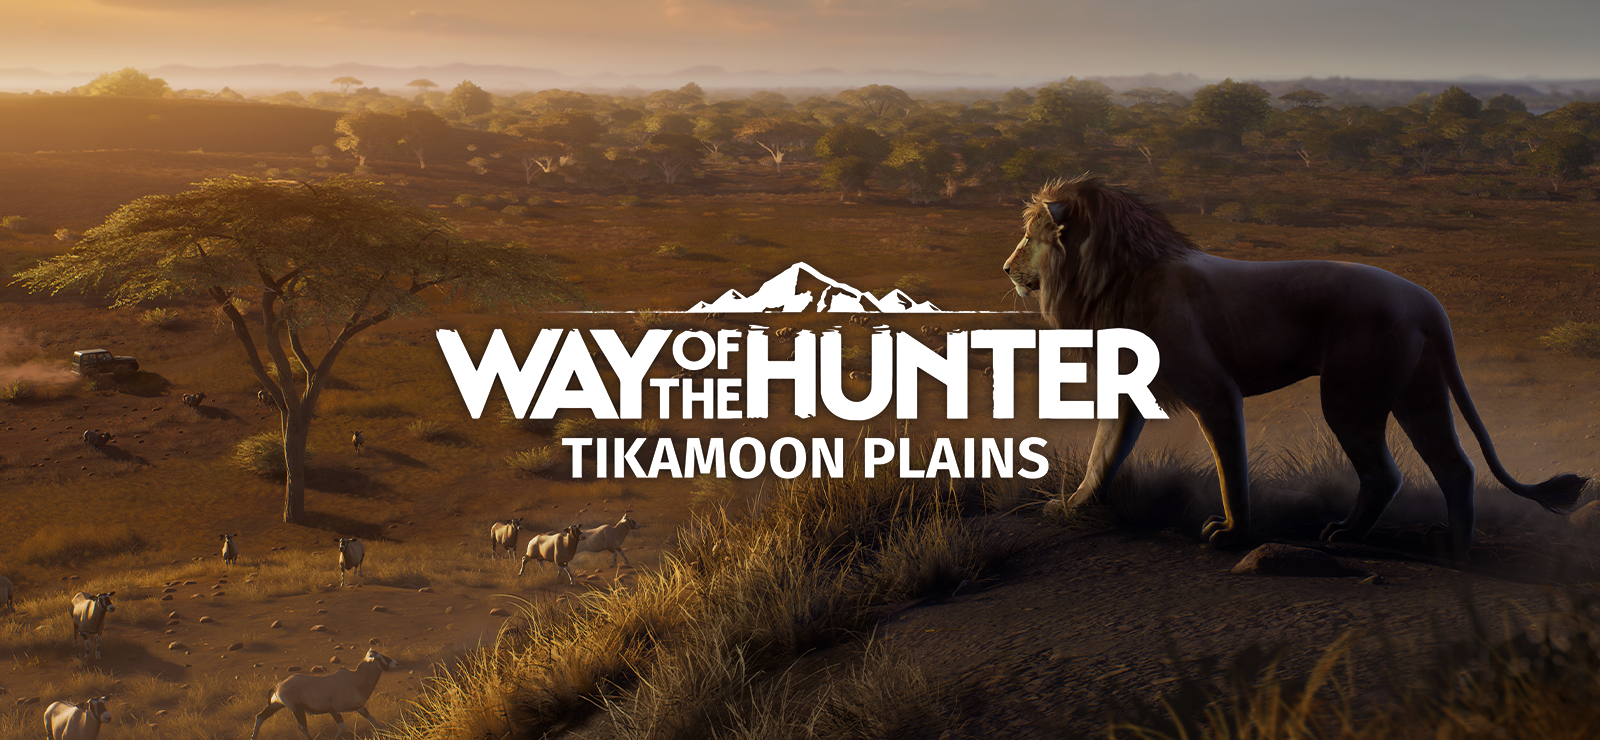 Way Of The Hunter - Tikamoon Plains